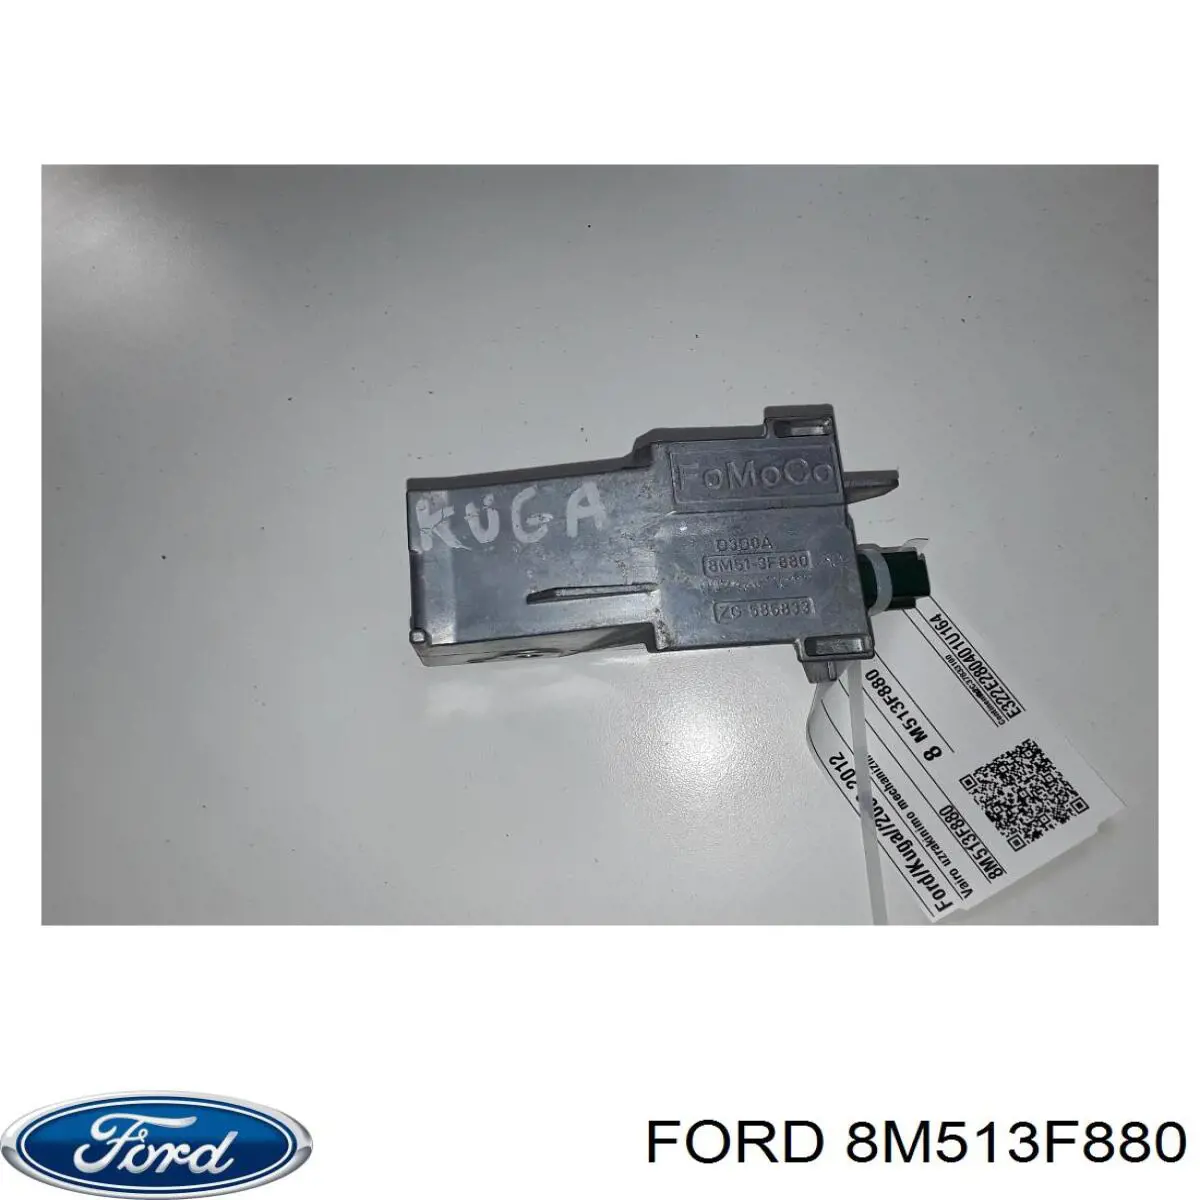 8M513F880 Ford electronica de columna de direccion